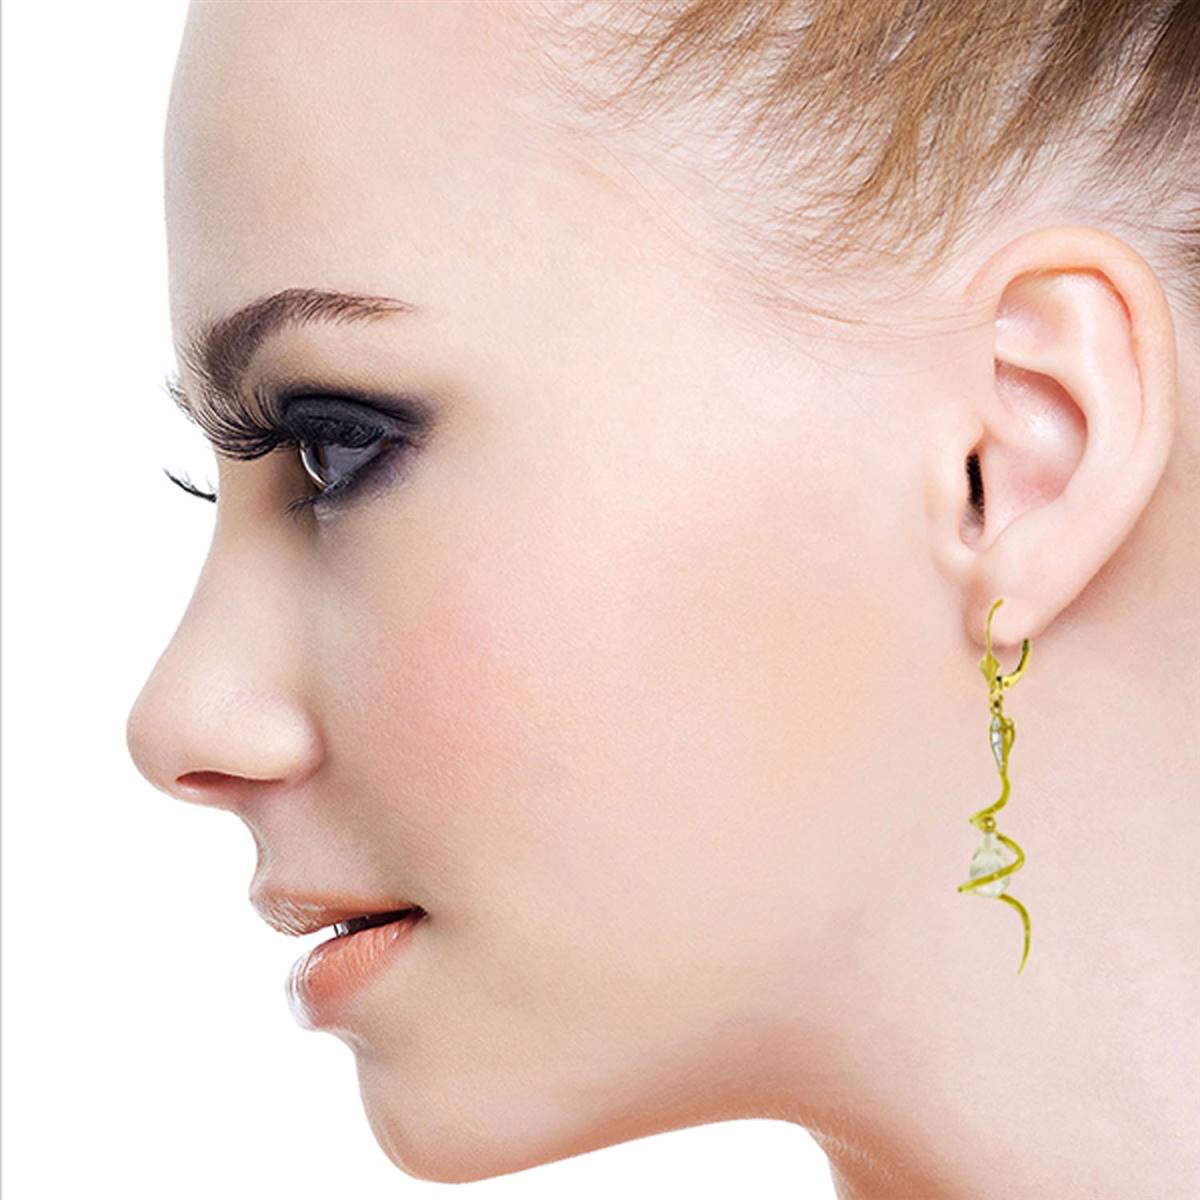 14K Solid Yellow Gold Snake Earrings w/ Dangling Briolette White Topaz & Diamonds